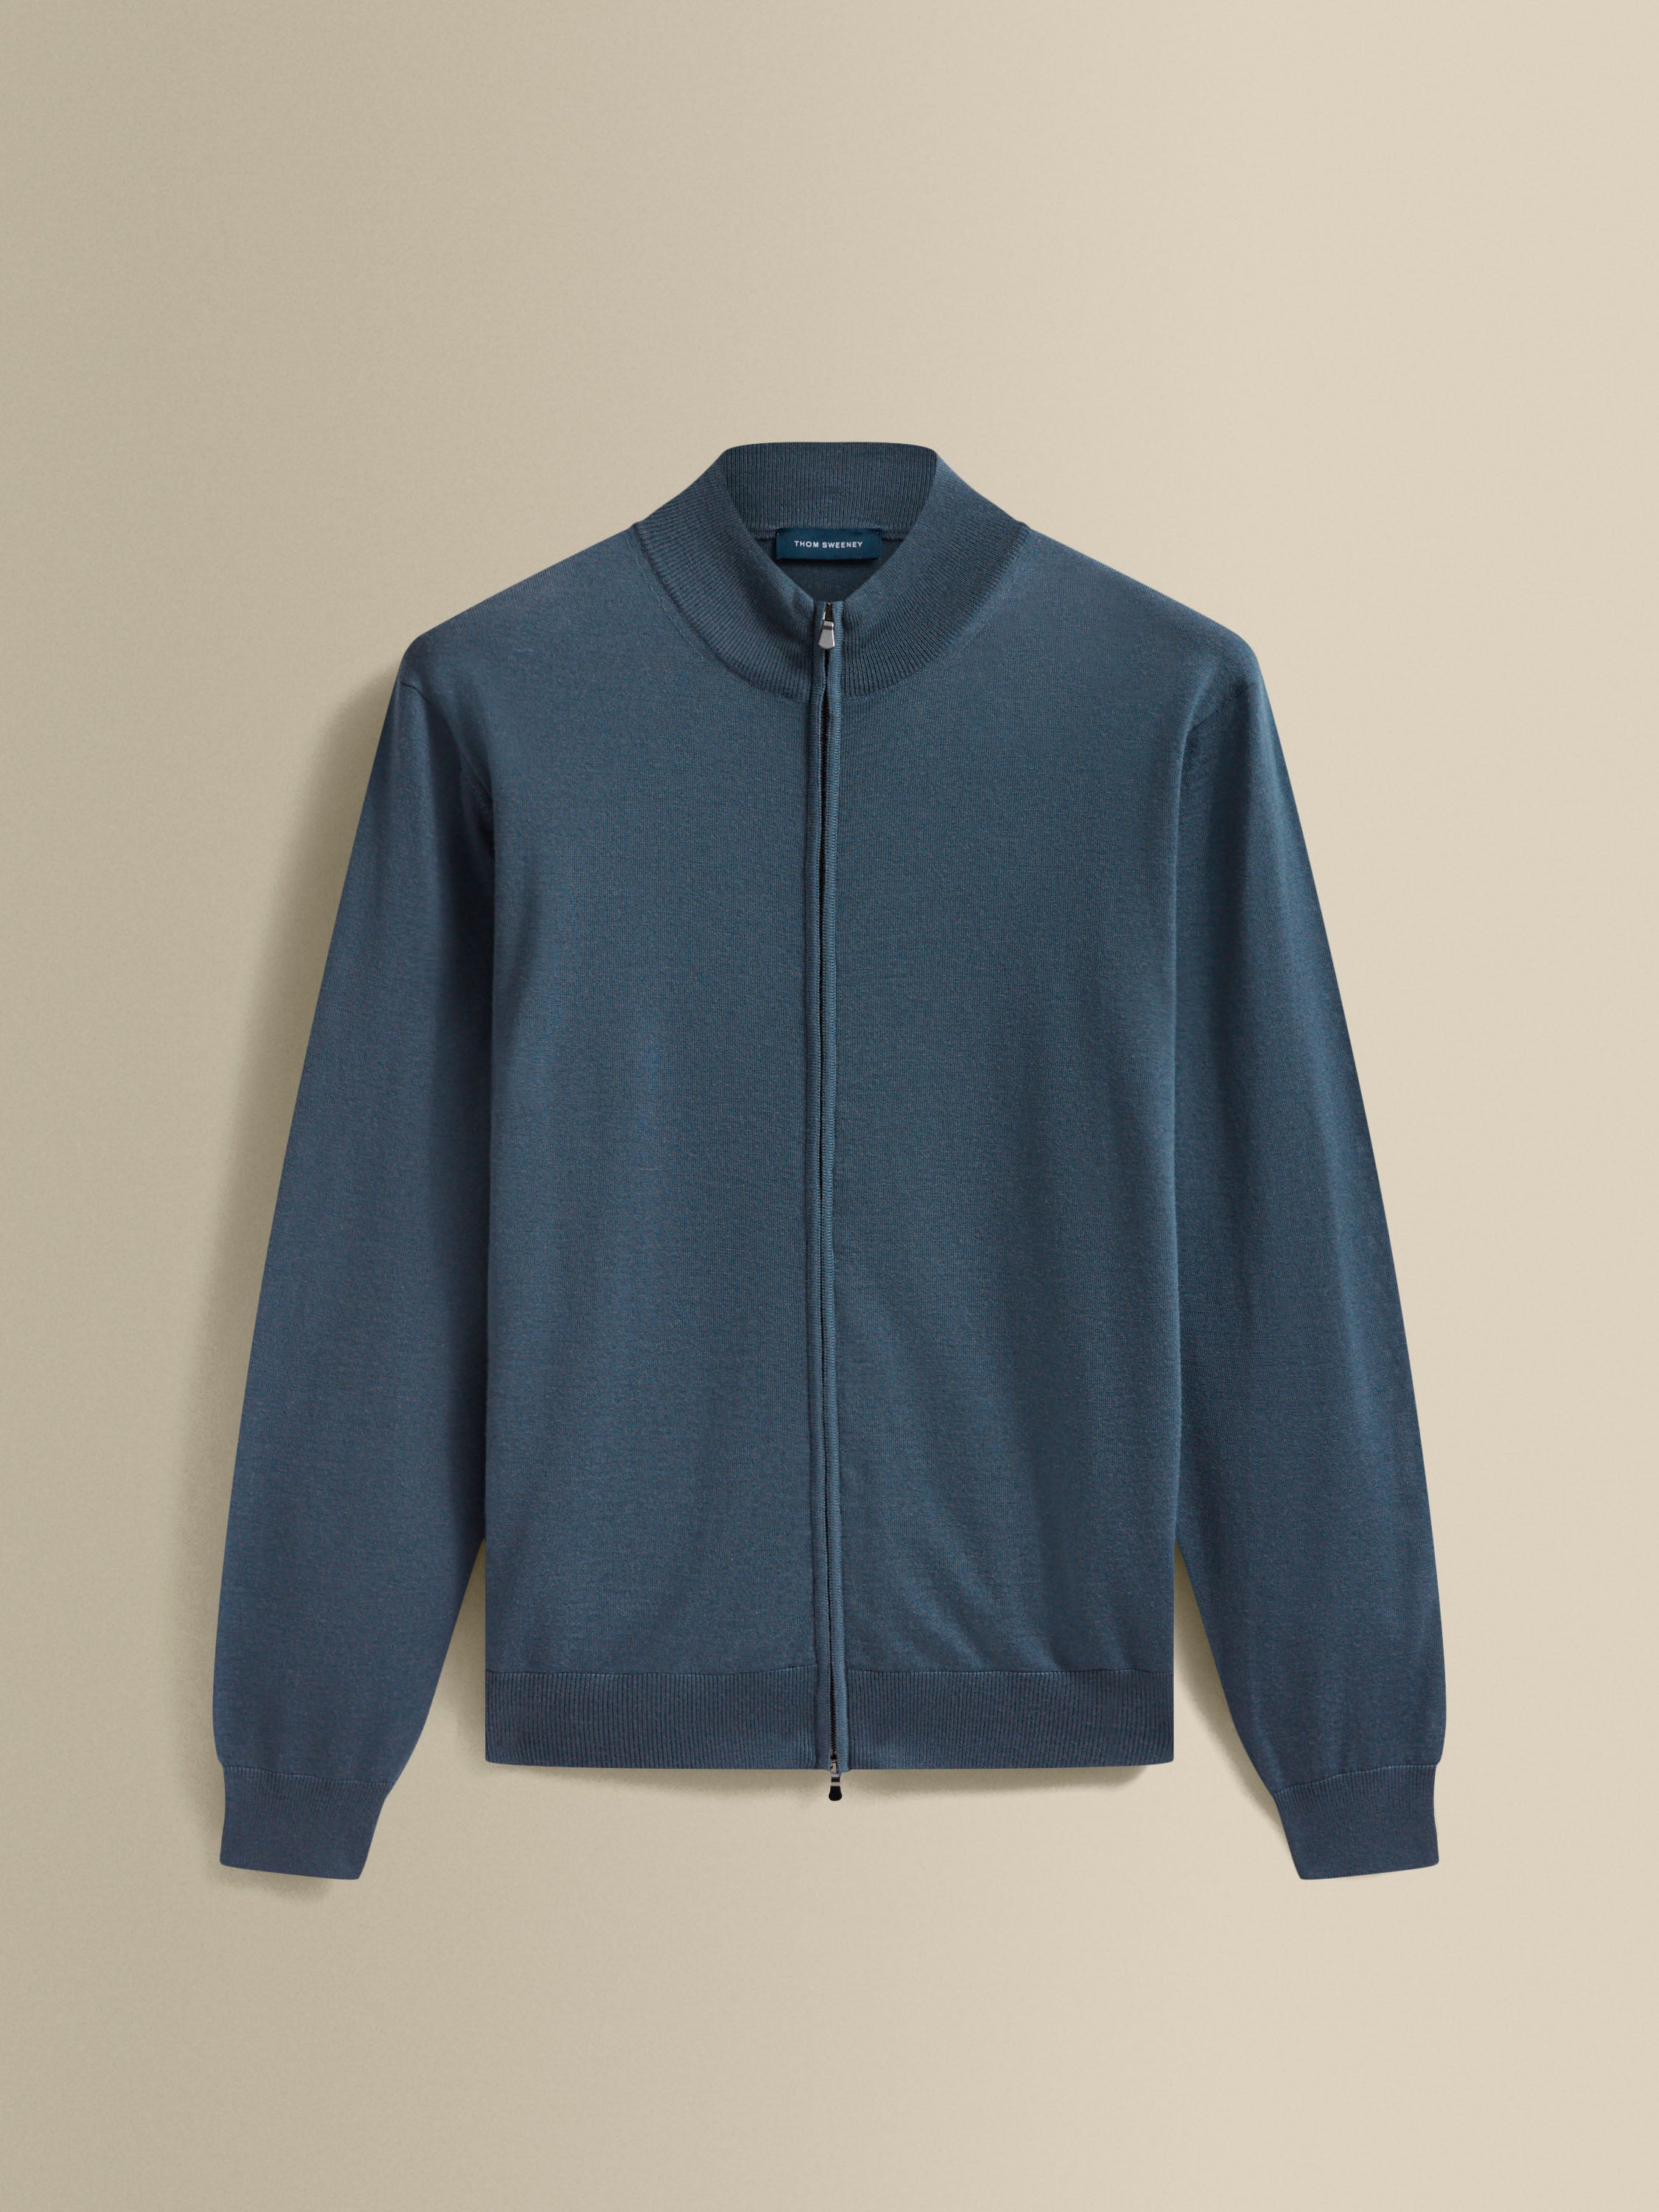 Merino Wool Zip-Through Mock Neck Knit Slate Blue Product Image